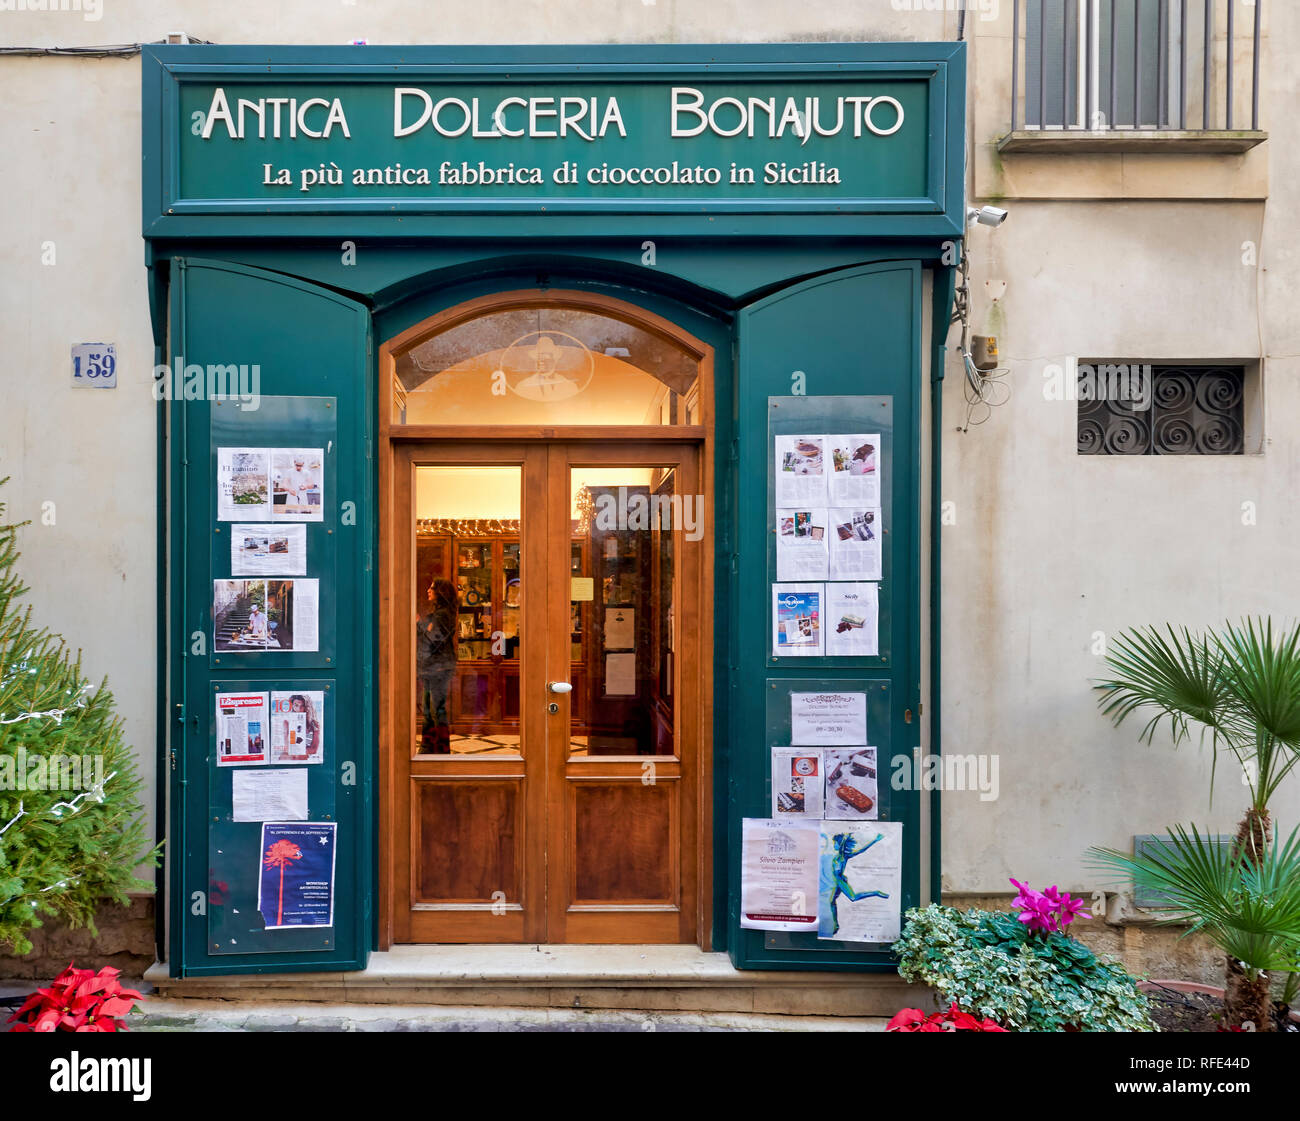 Antica dolceria Bonajuto la plus ancienne chocolaterie de la Sicile. Modica Italie Banque D'Images